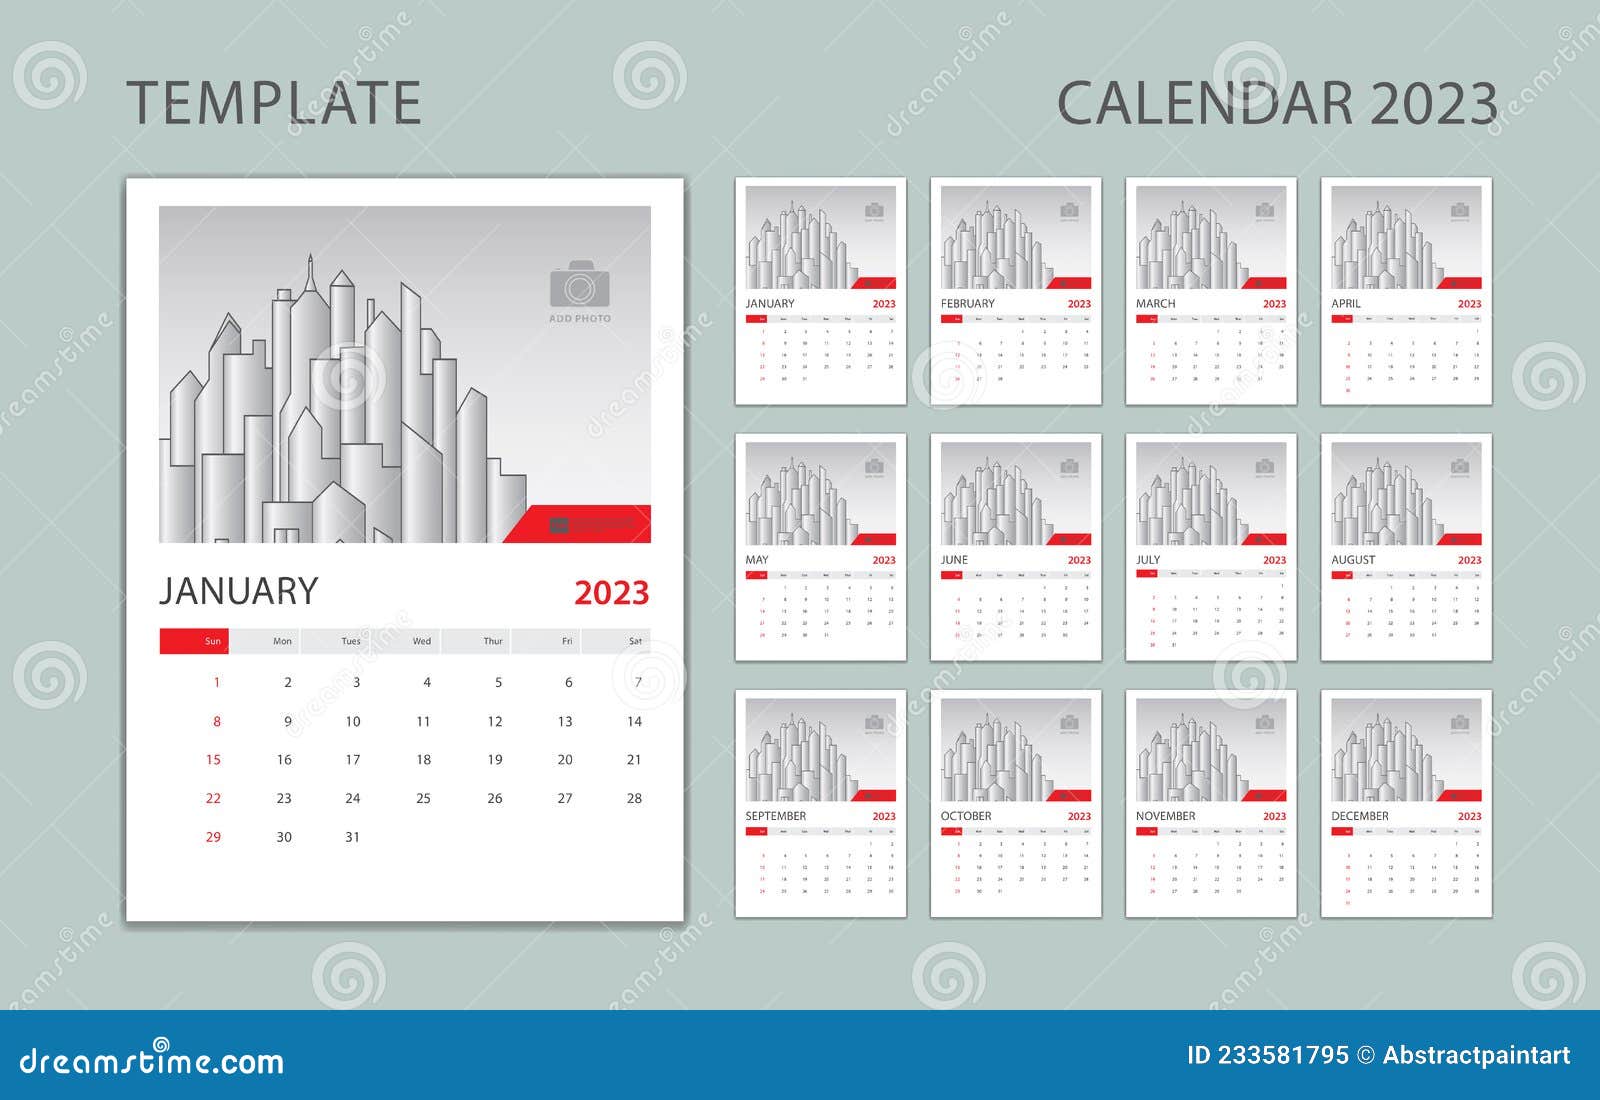 Calendar 2023 Template Vector Wall Calendar 2023 Design Desk Calendar